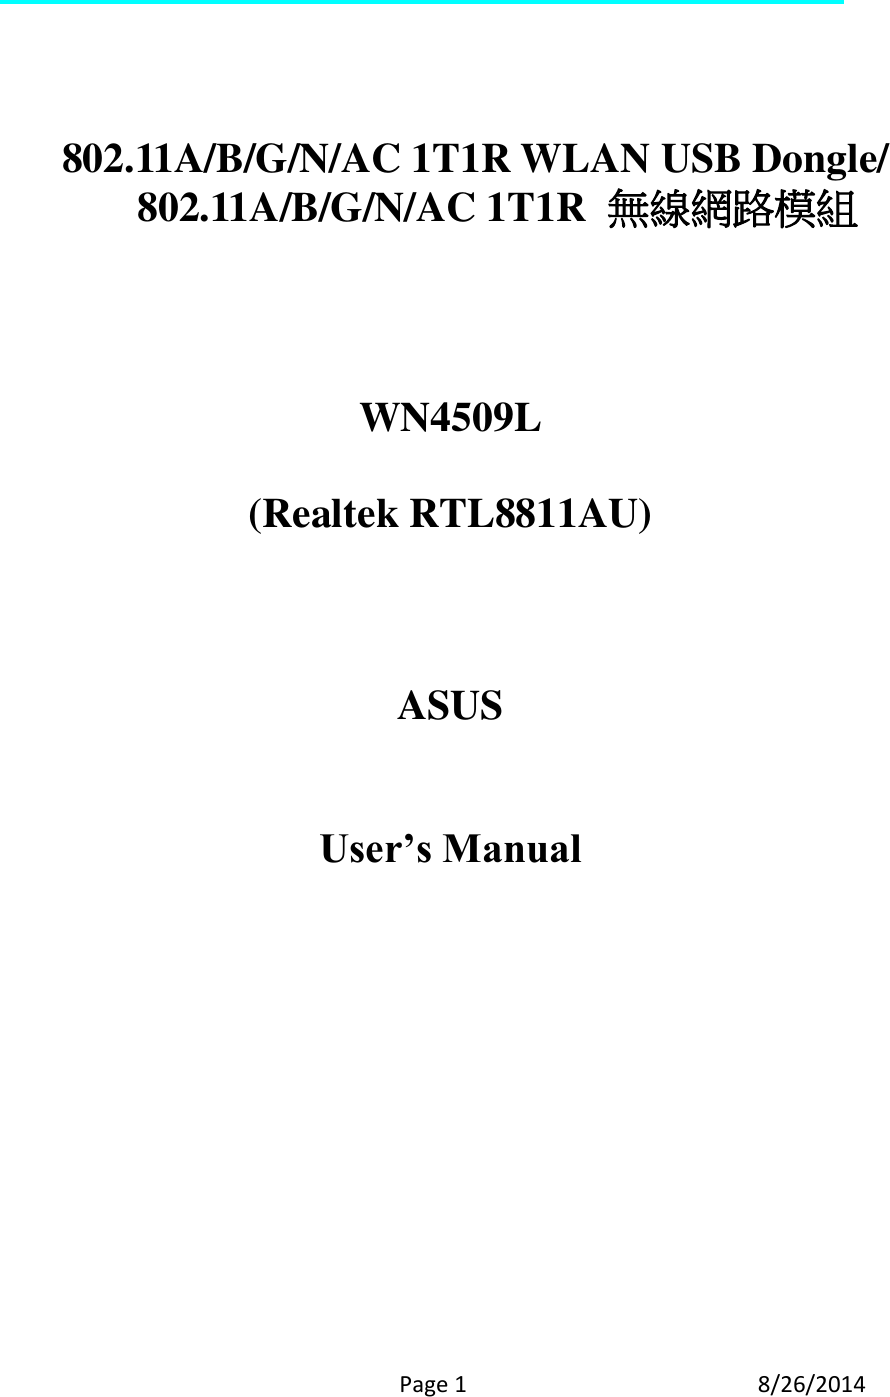     Page 1  8/26/2014      802.11A/B/G/N/AC 1T1R WLAN USB Dongle/   802.11A/B/G/N/AC 1T1R  無線網路模組    WN4509L  (Realtek RTL8811AU)    ASUS   User’s Manual 